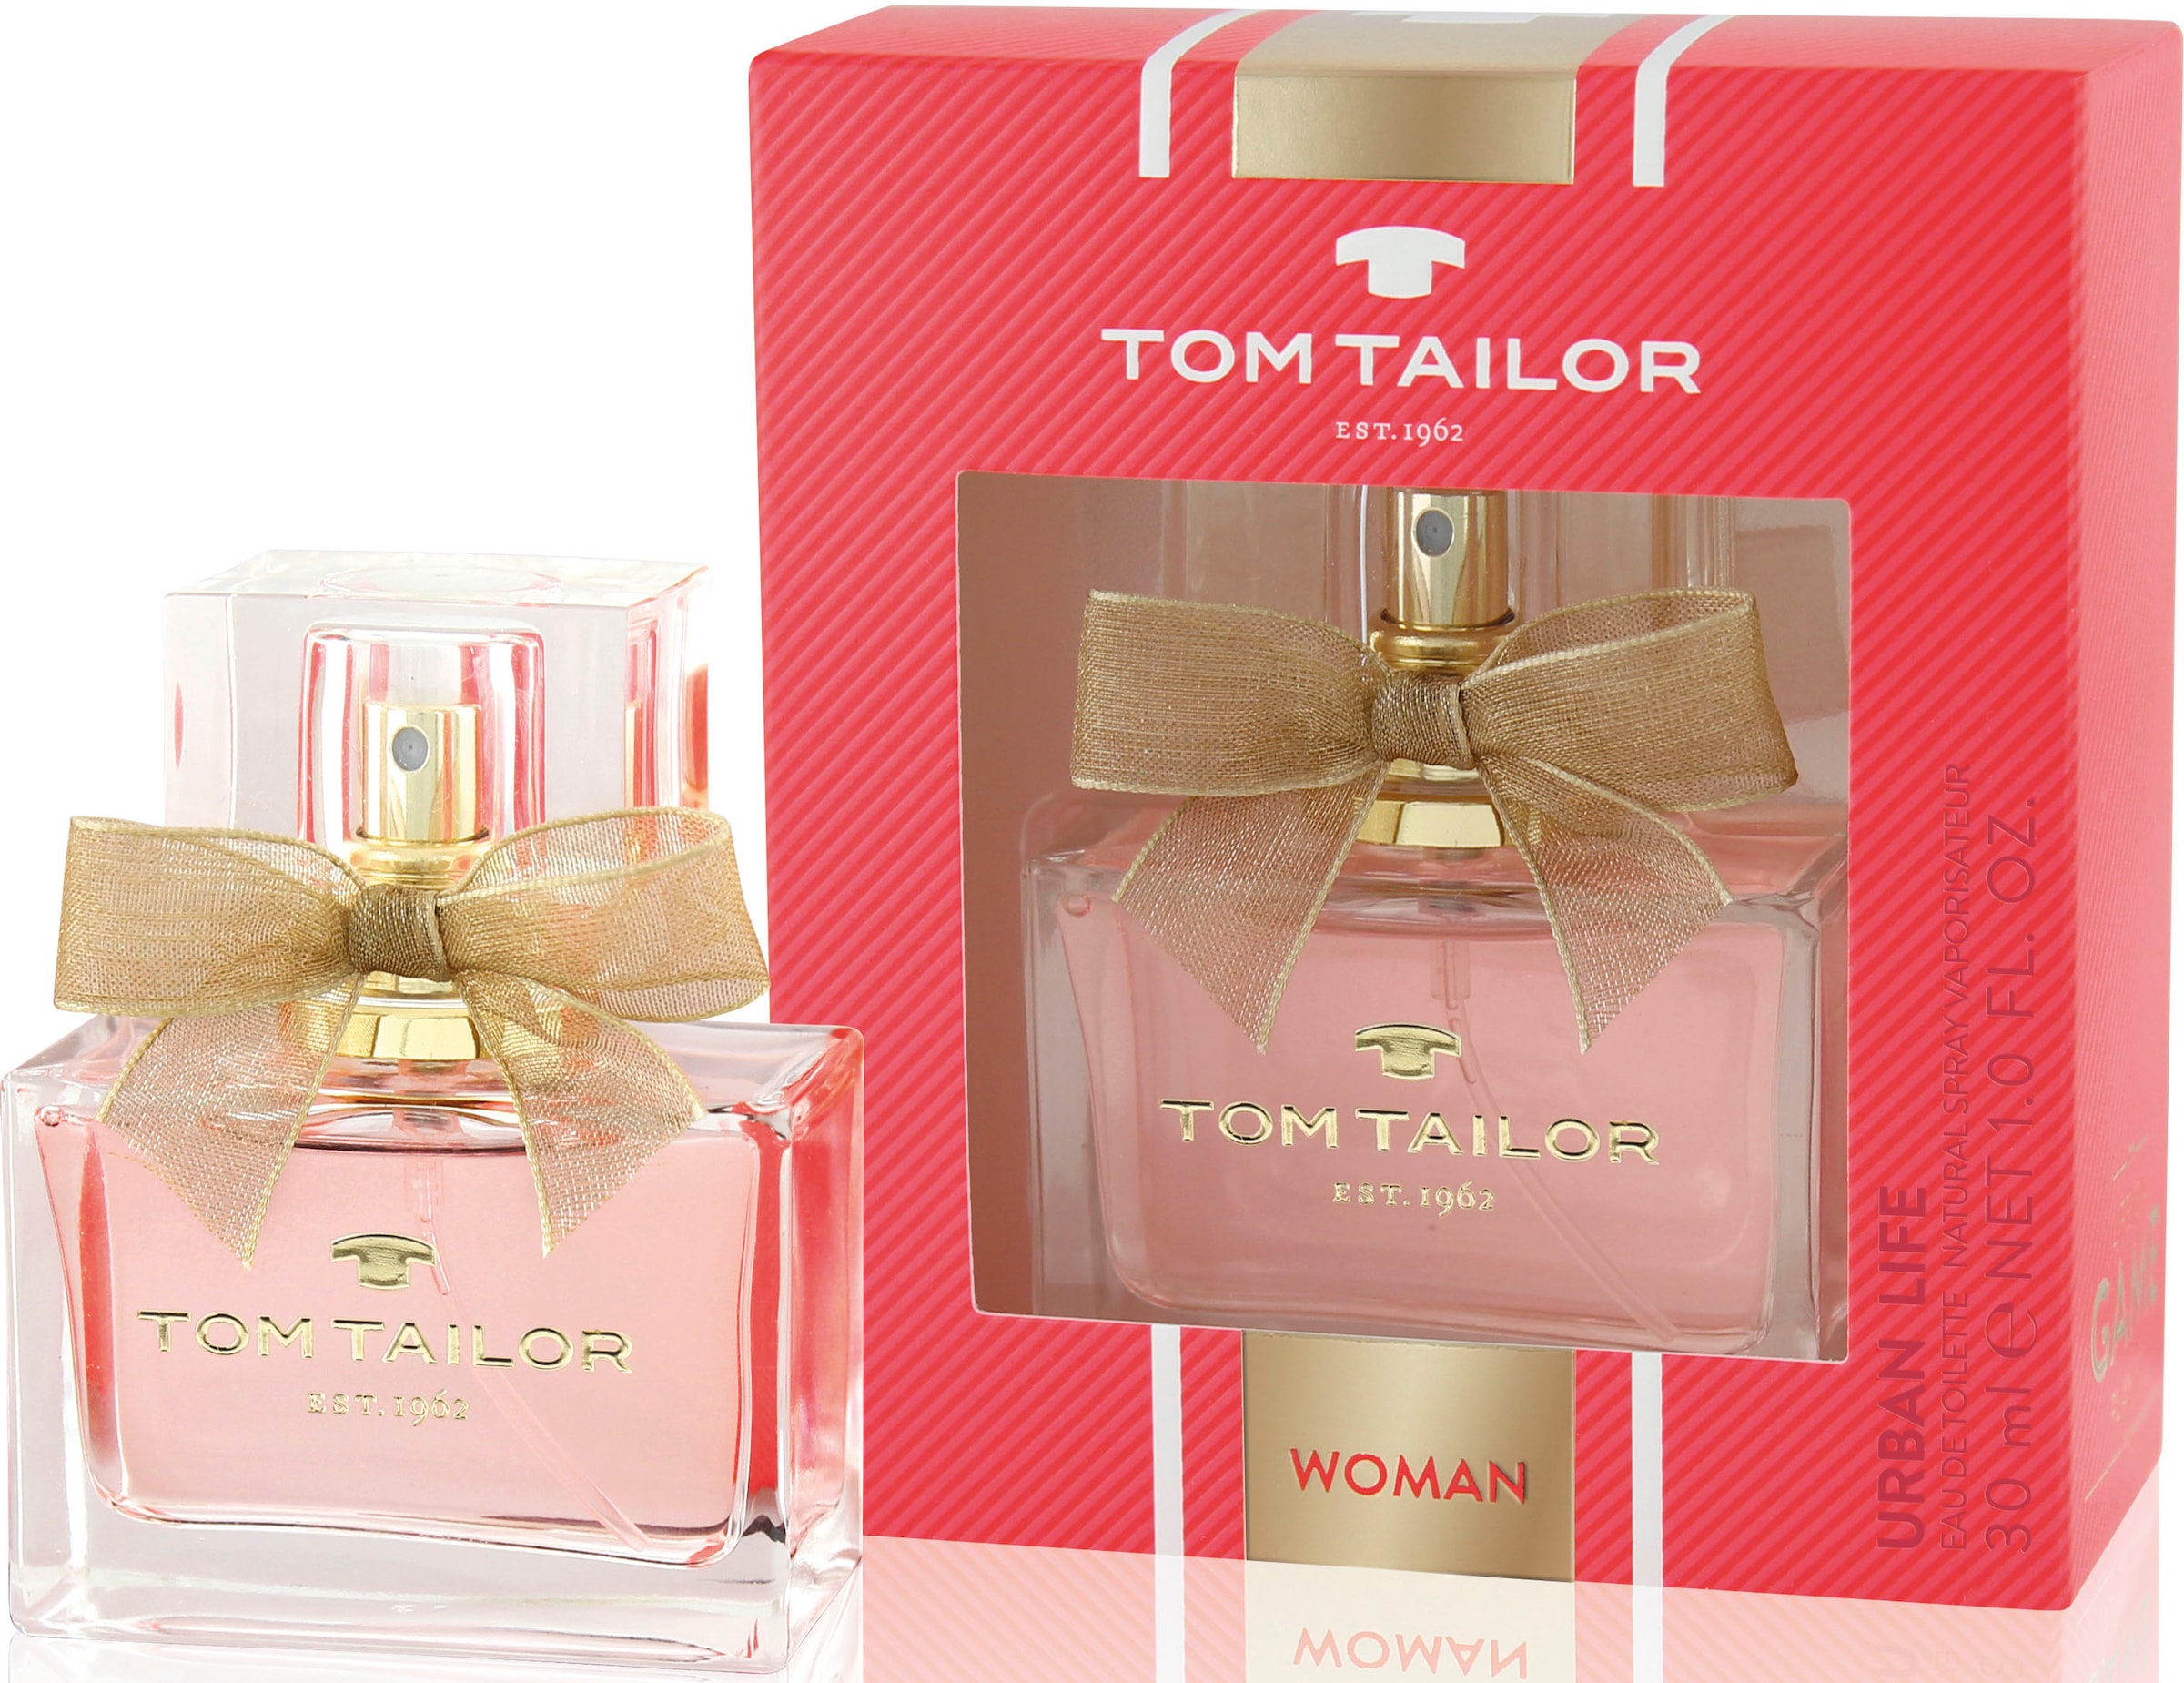 Том тейлор урбан. Духи Tom Tailor Urban Life woman. Tom Tailor est 1962. Tom Tailor Parfum Urban Life. Tom Tailor Urban Life 30ml женские.